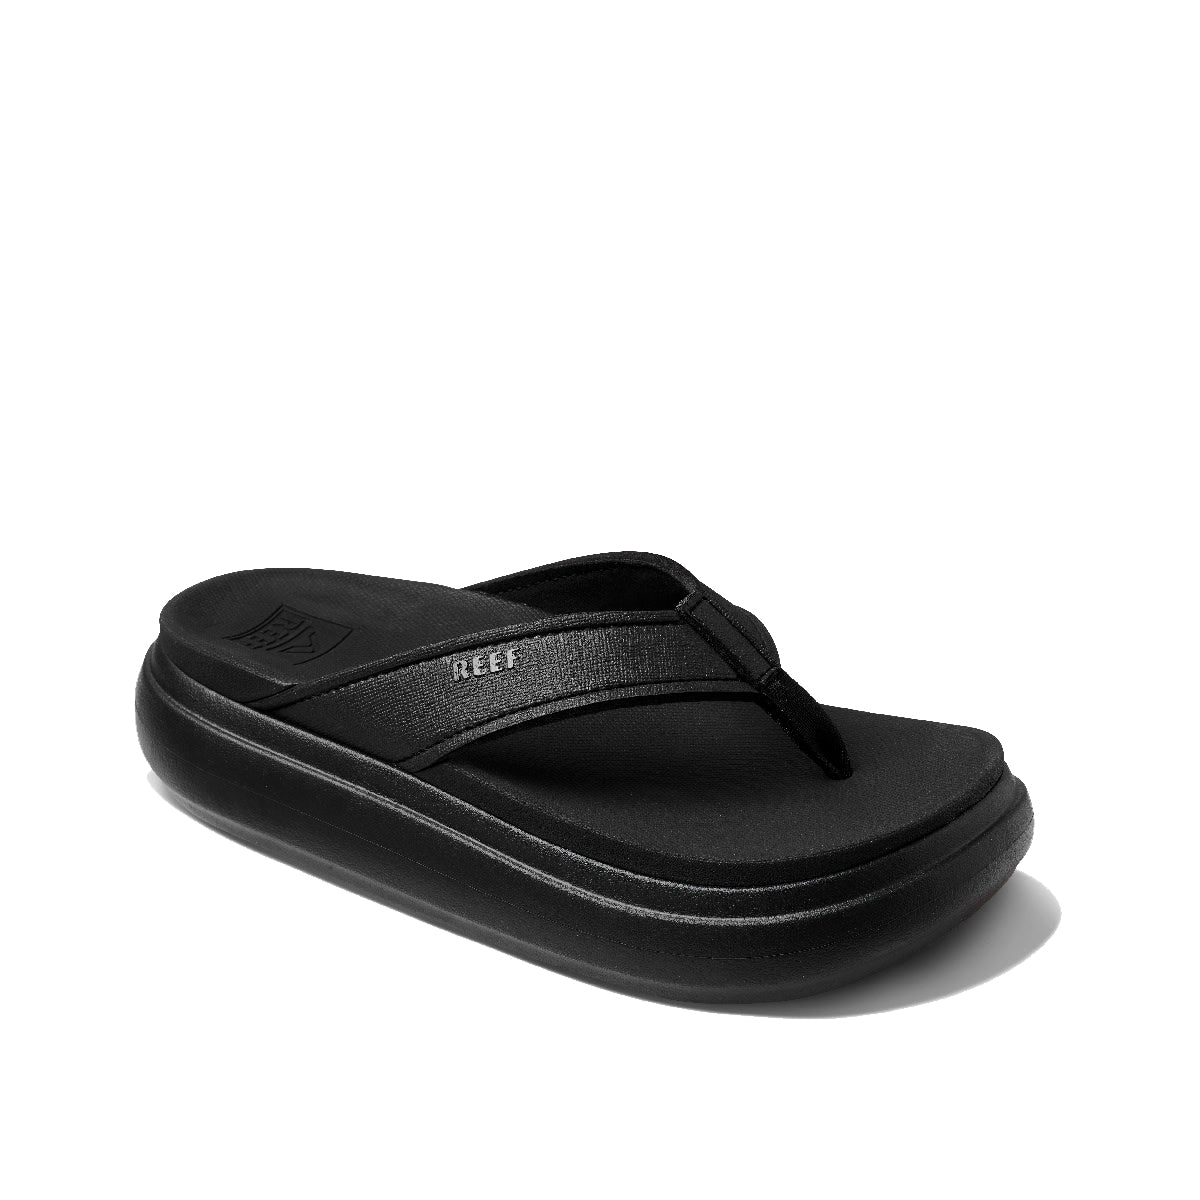 Reef Cushion Bondi Womens Sandals Black-Black 11